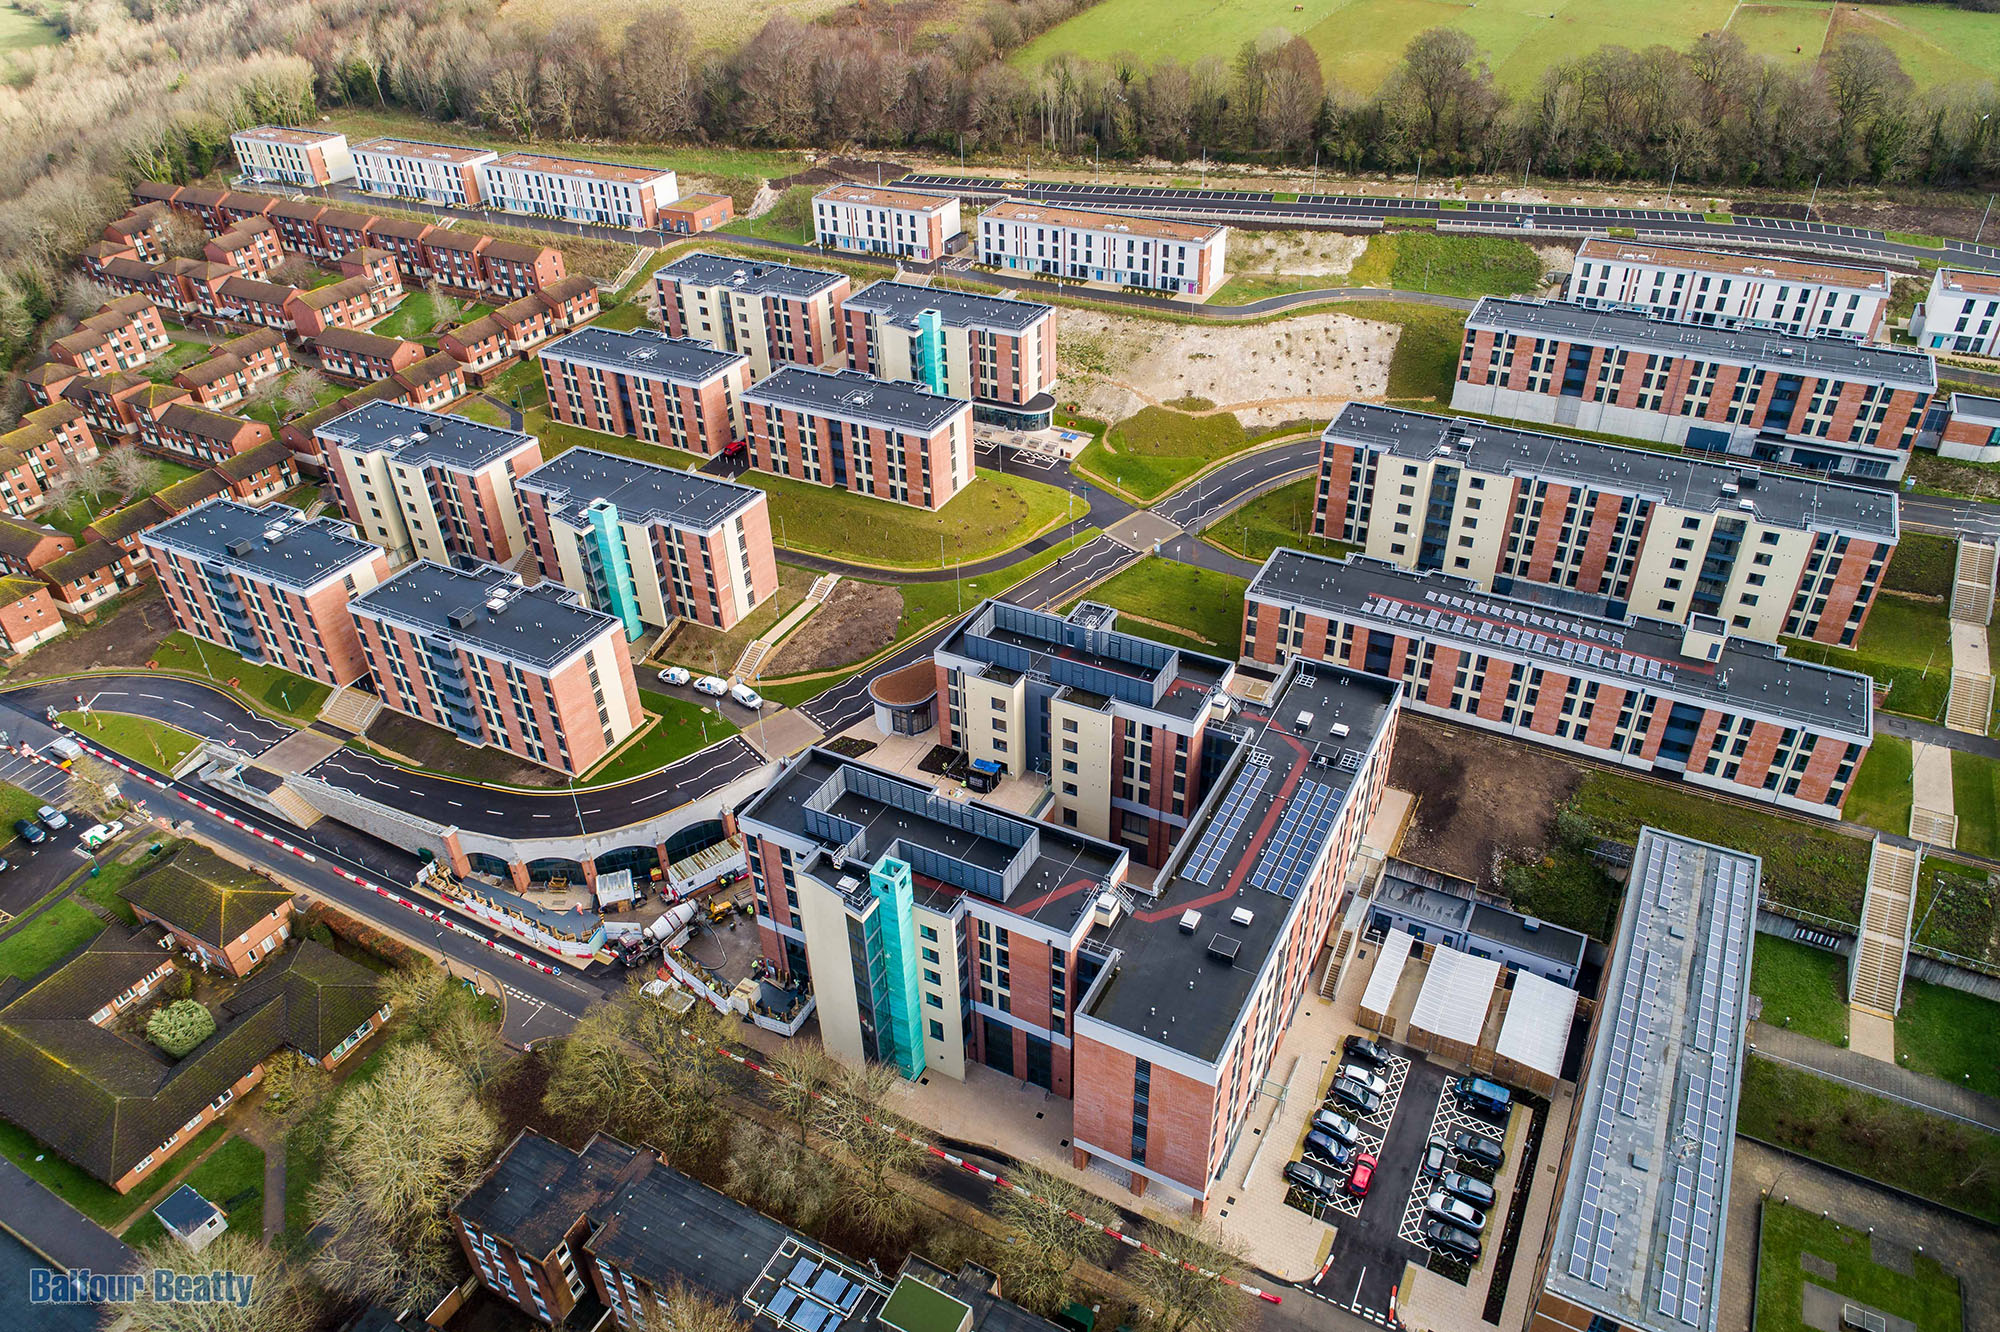 University of Sussex, East Slopes Residencies aerial view